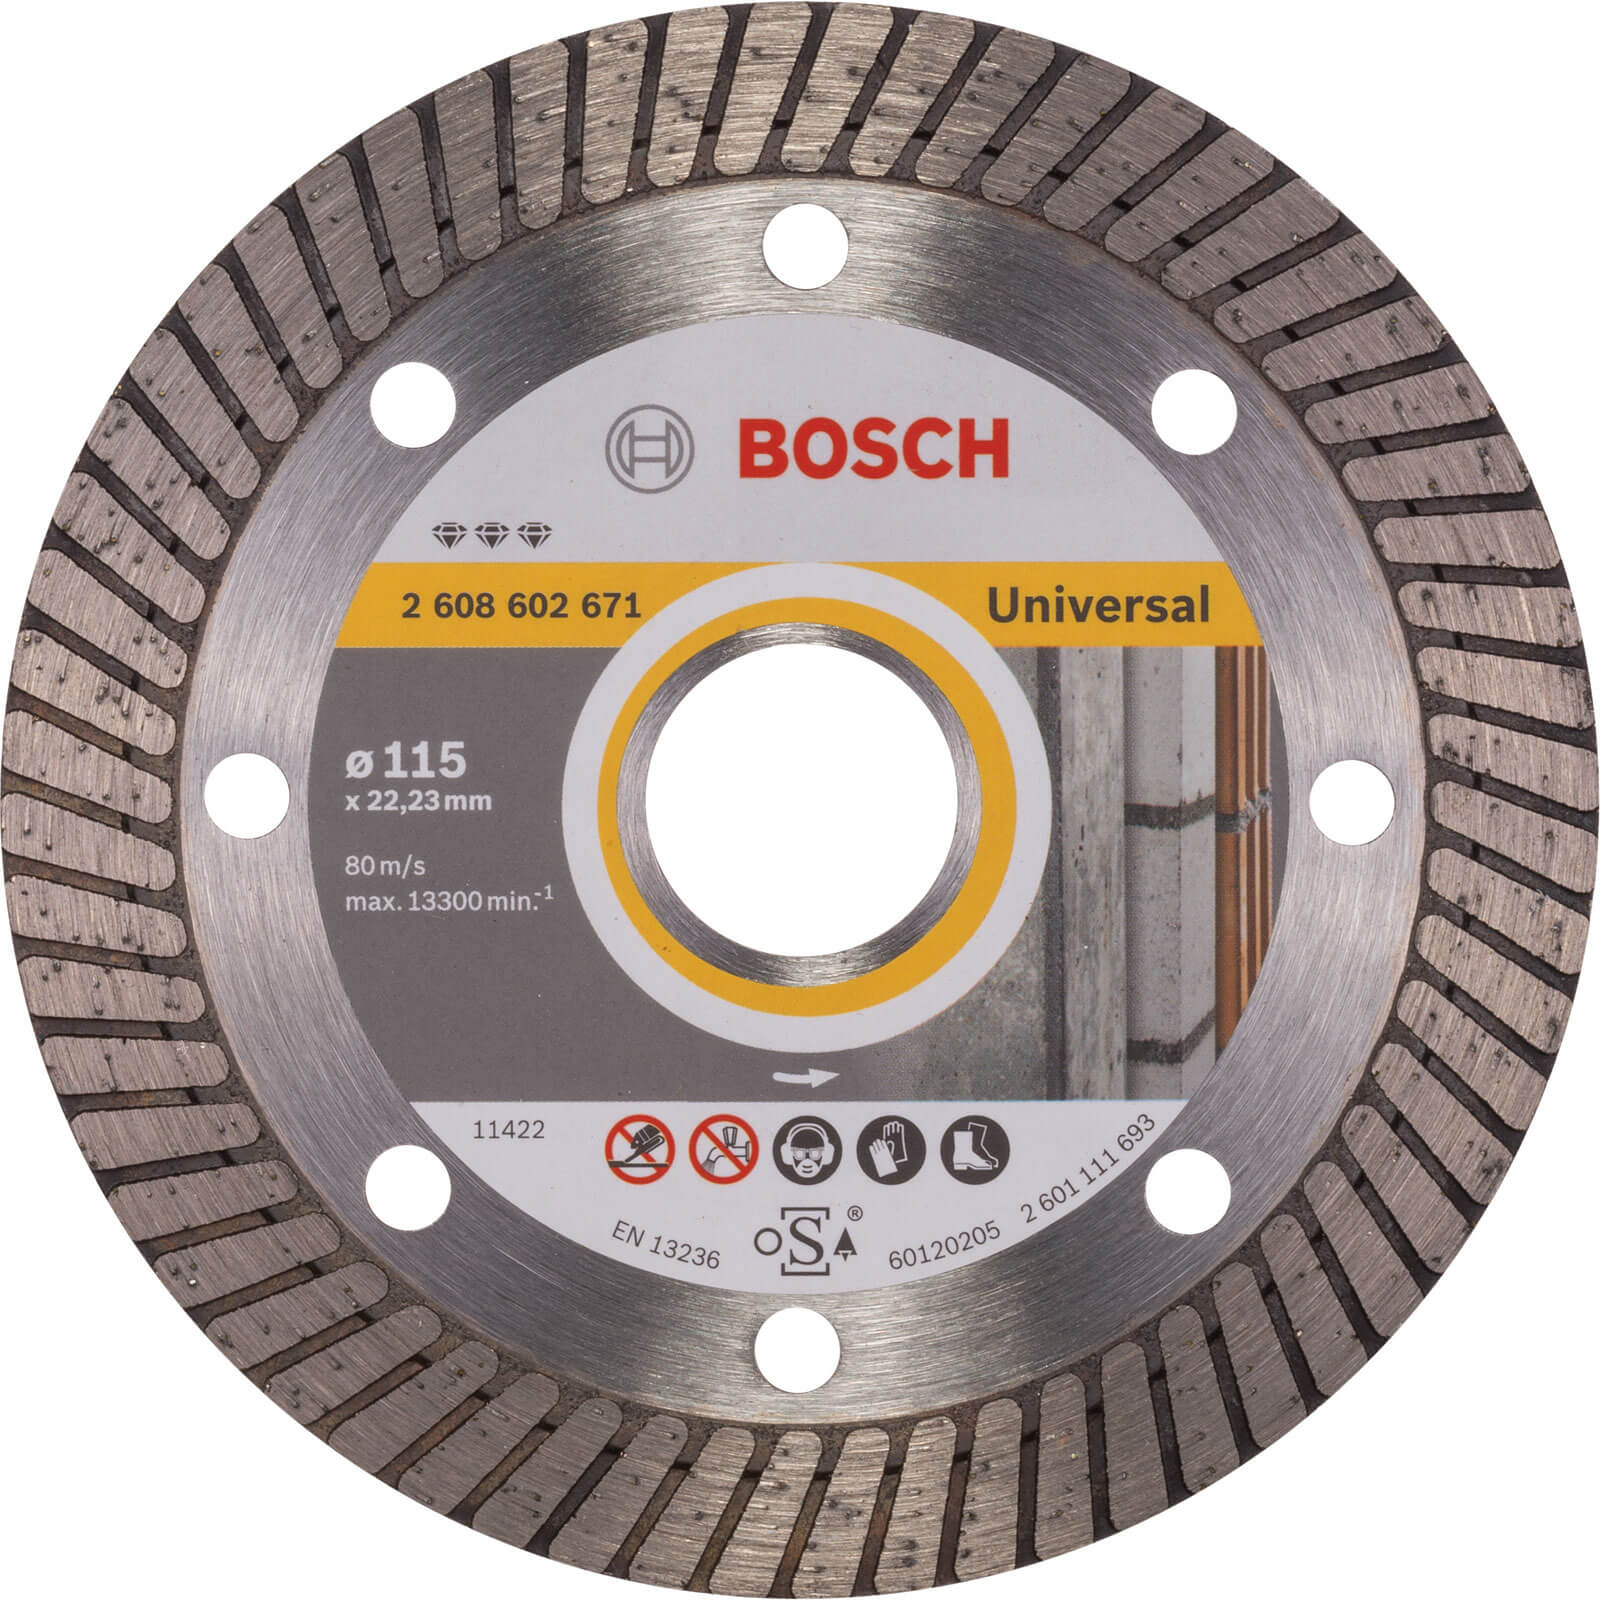 Bosch Turbo Universal Diamond Cutting Disc 115mm